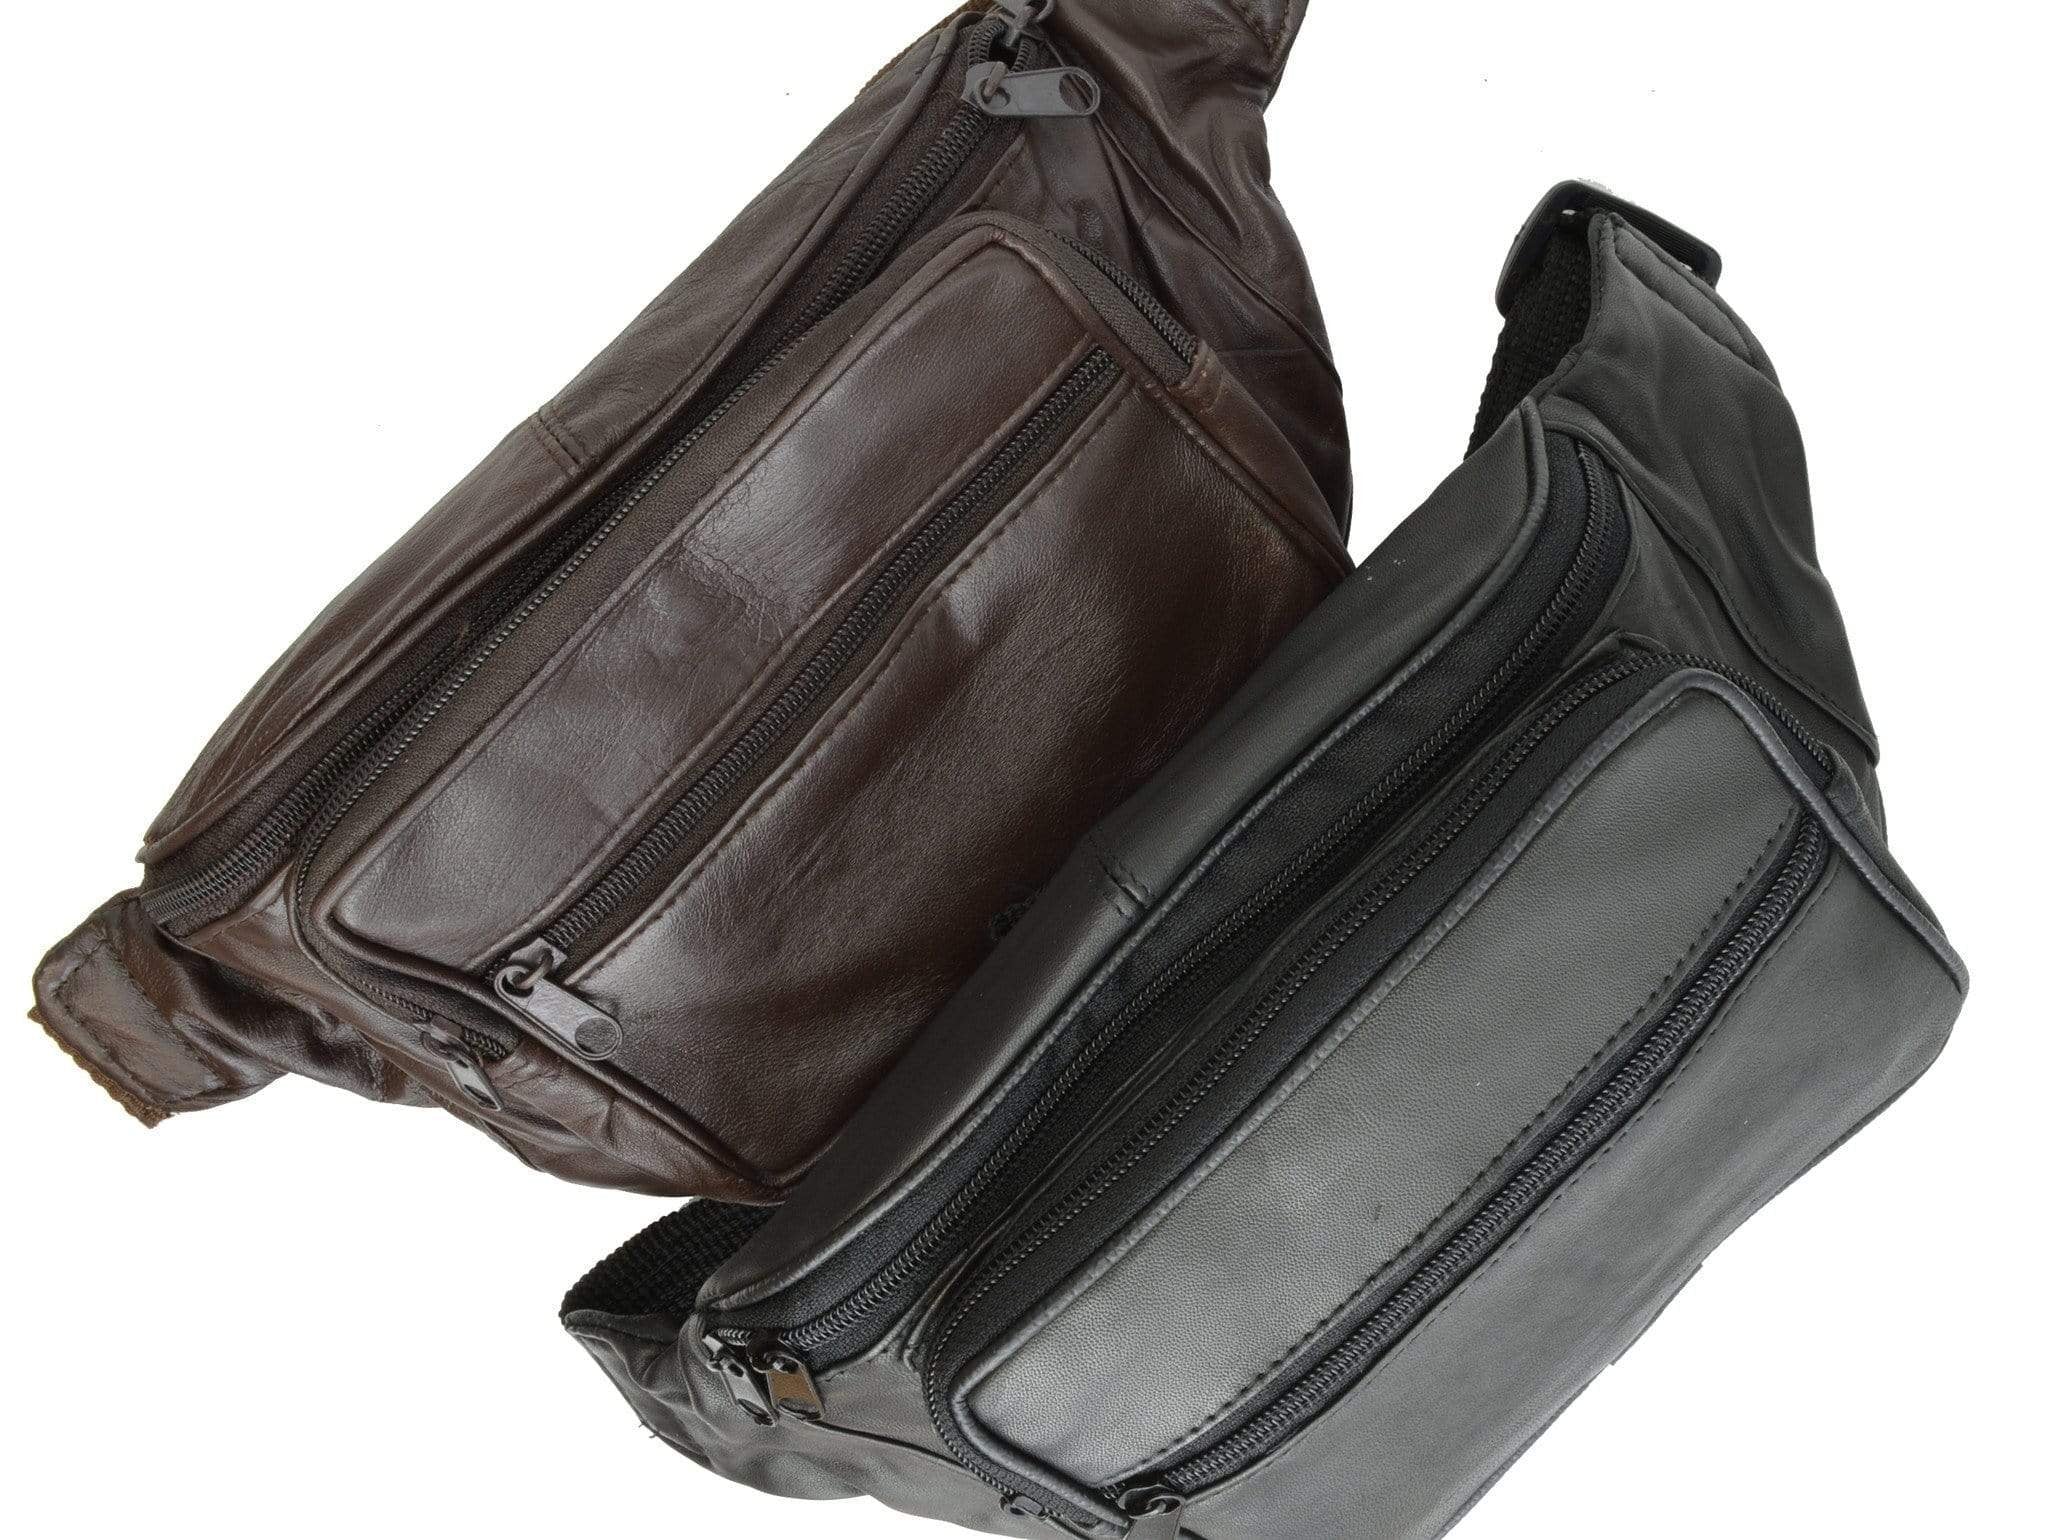 Genuine Leather Fanny Pack Multi Zippered Waist Bag Hip Belt Purse Black  Pouch